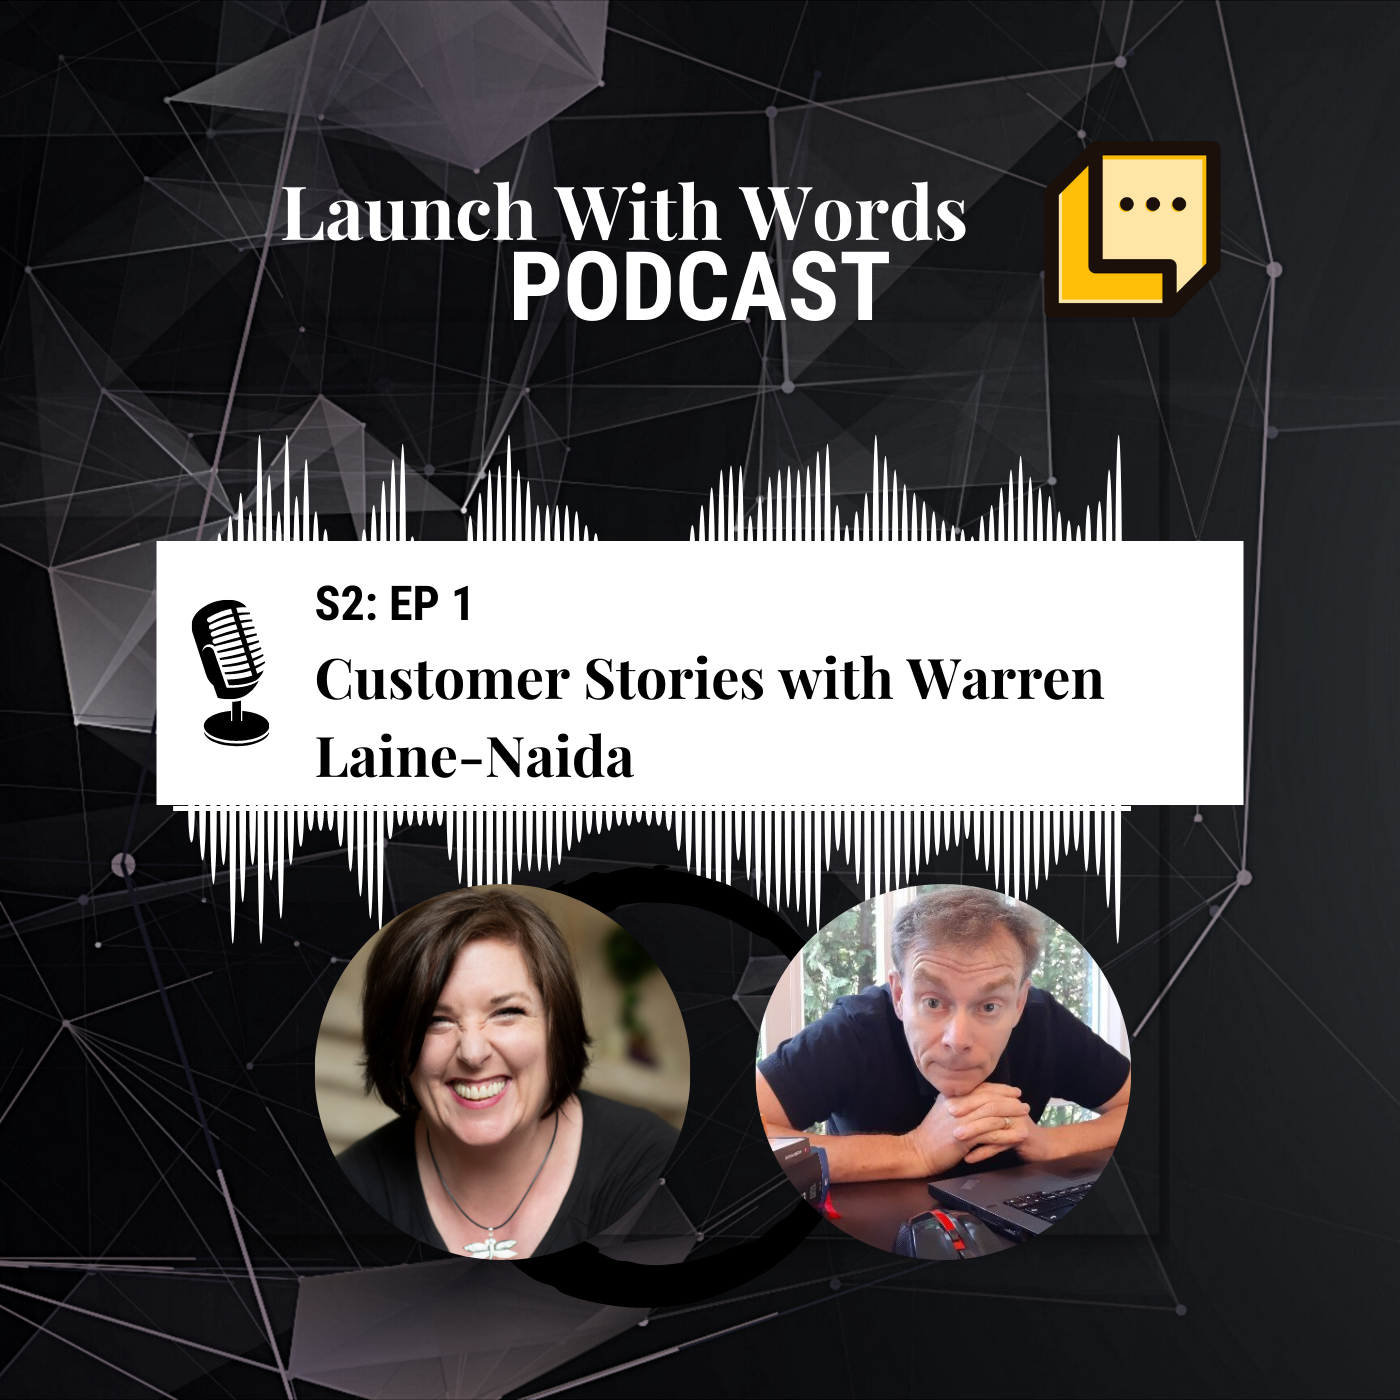 Customer Stories with Warren Laine-Naida